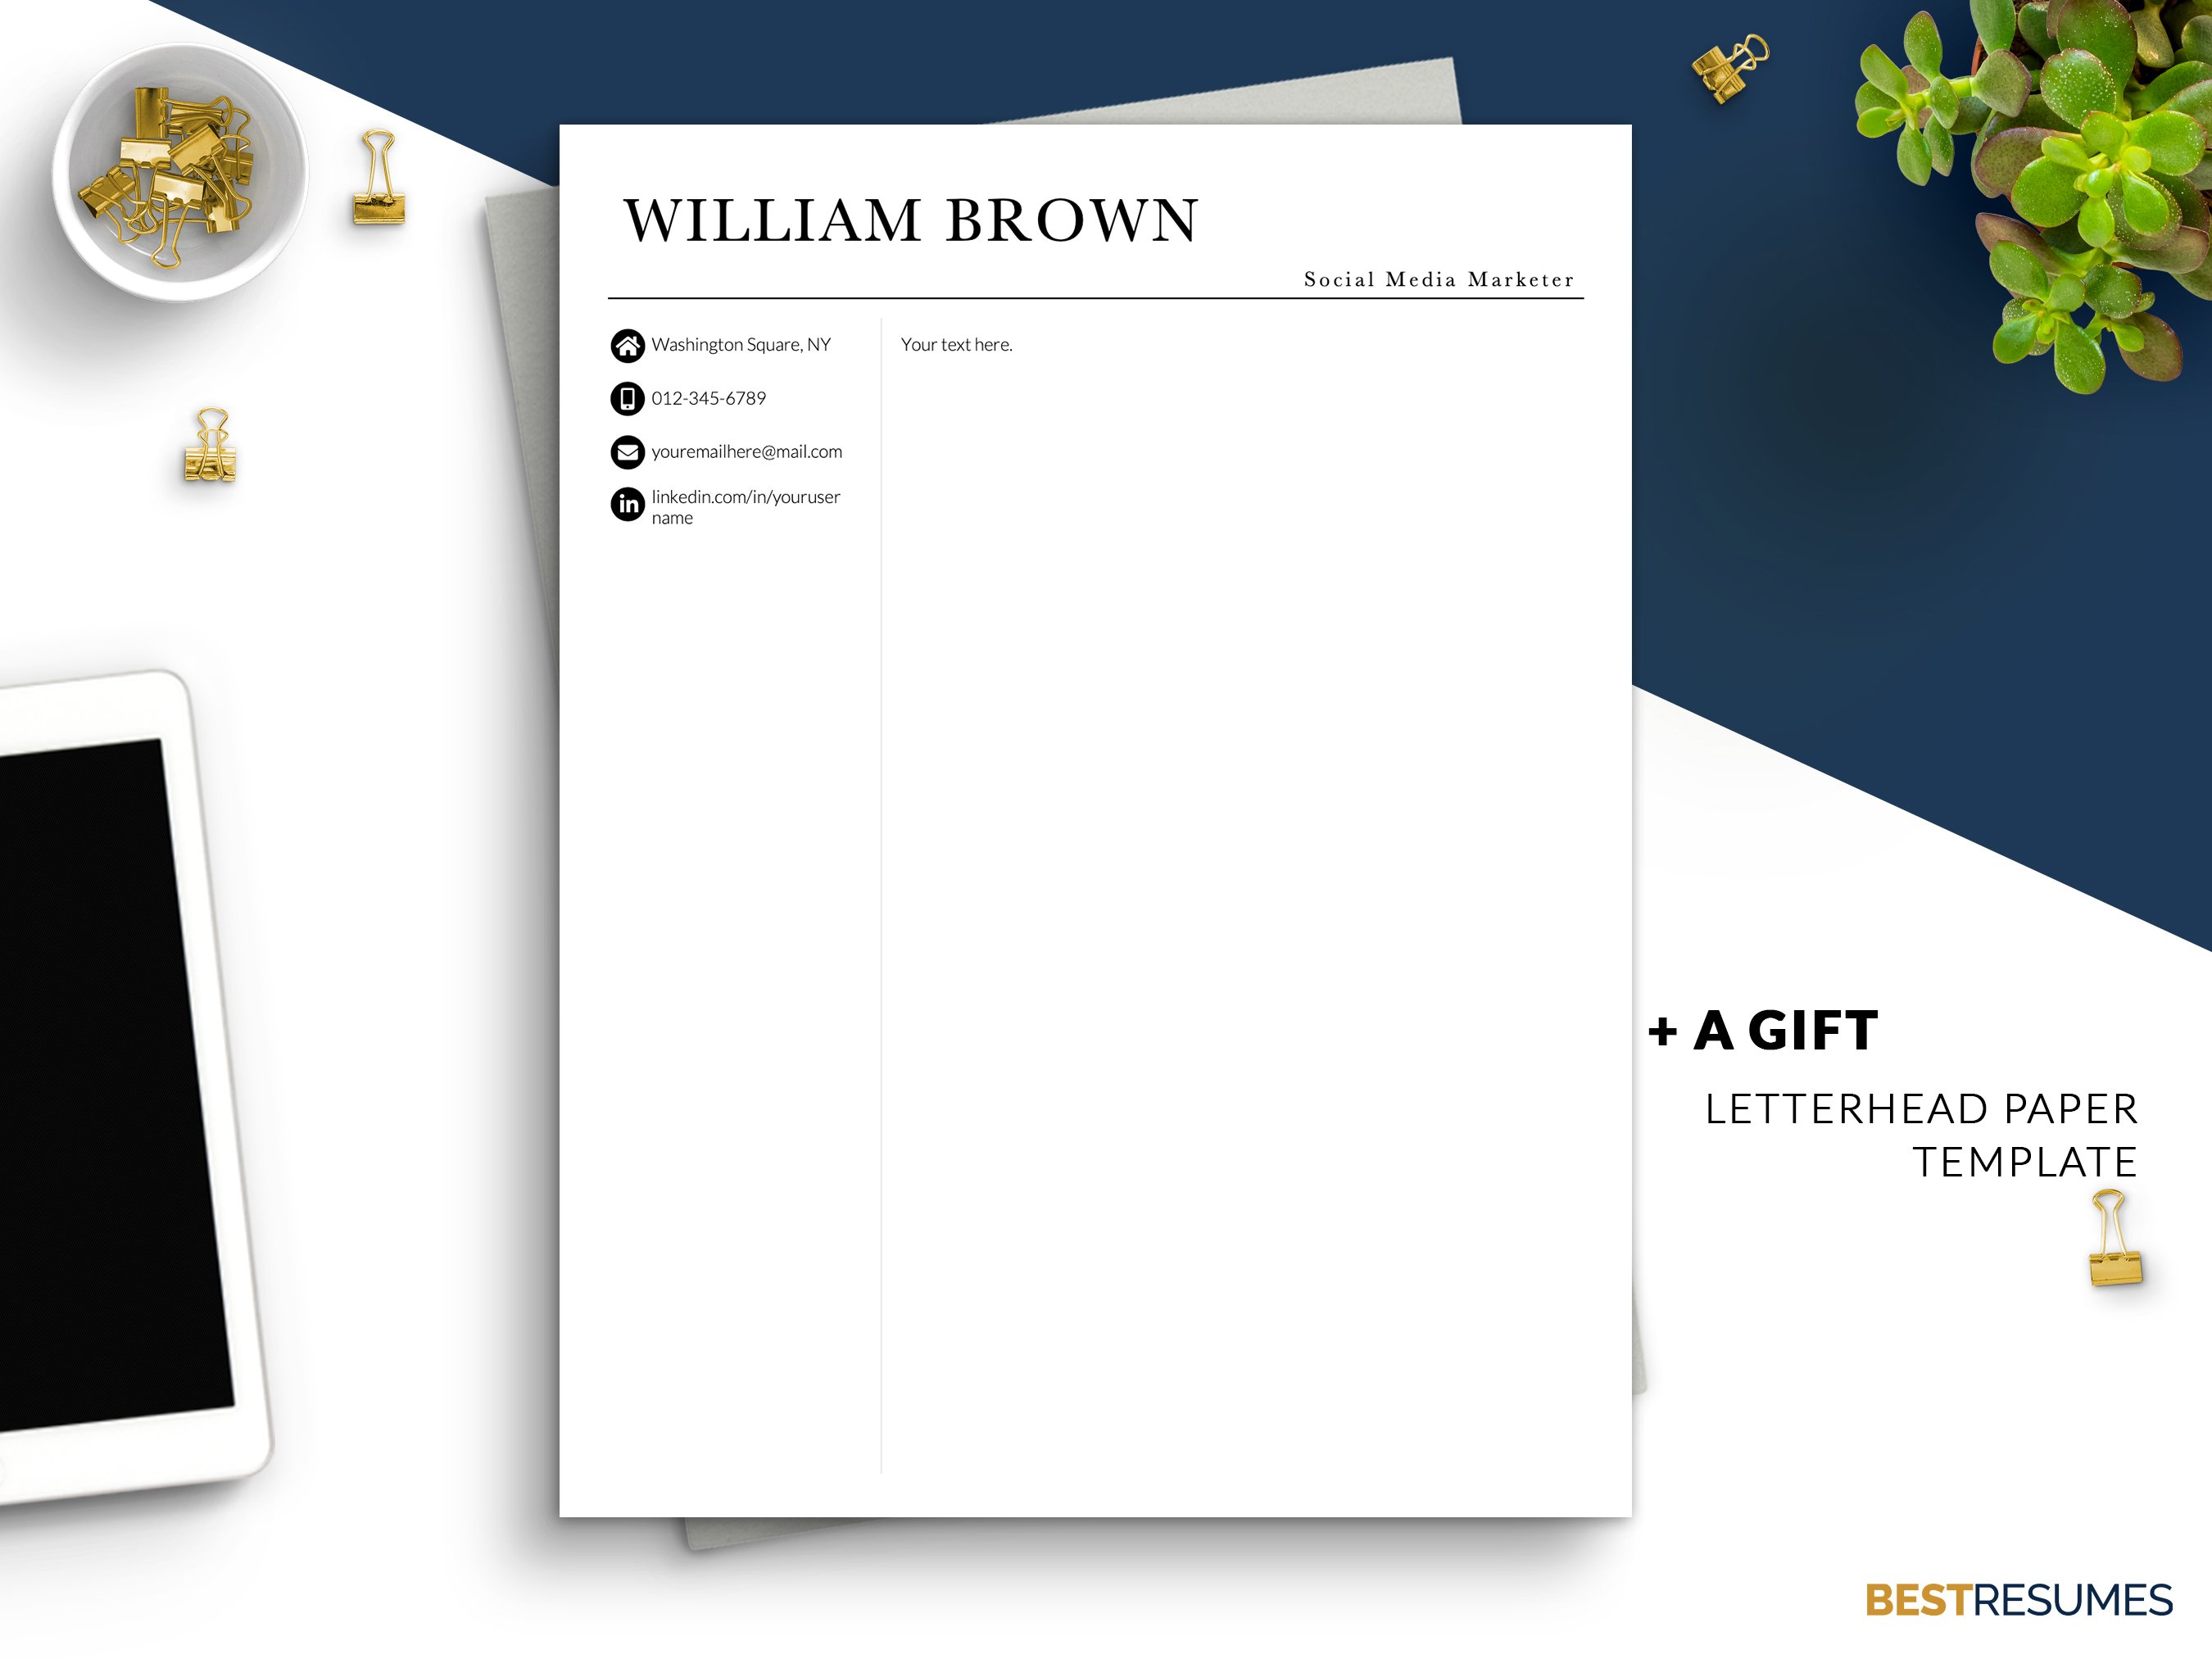 social media marketing resume template letterhead template william brown 301